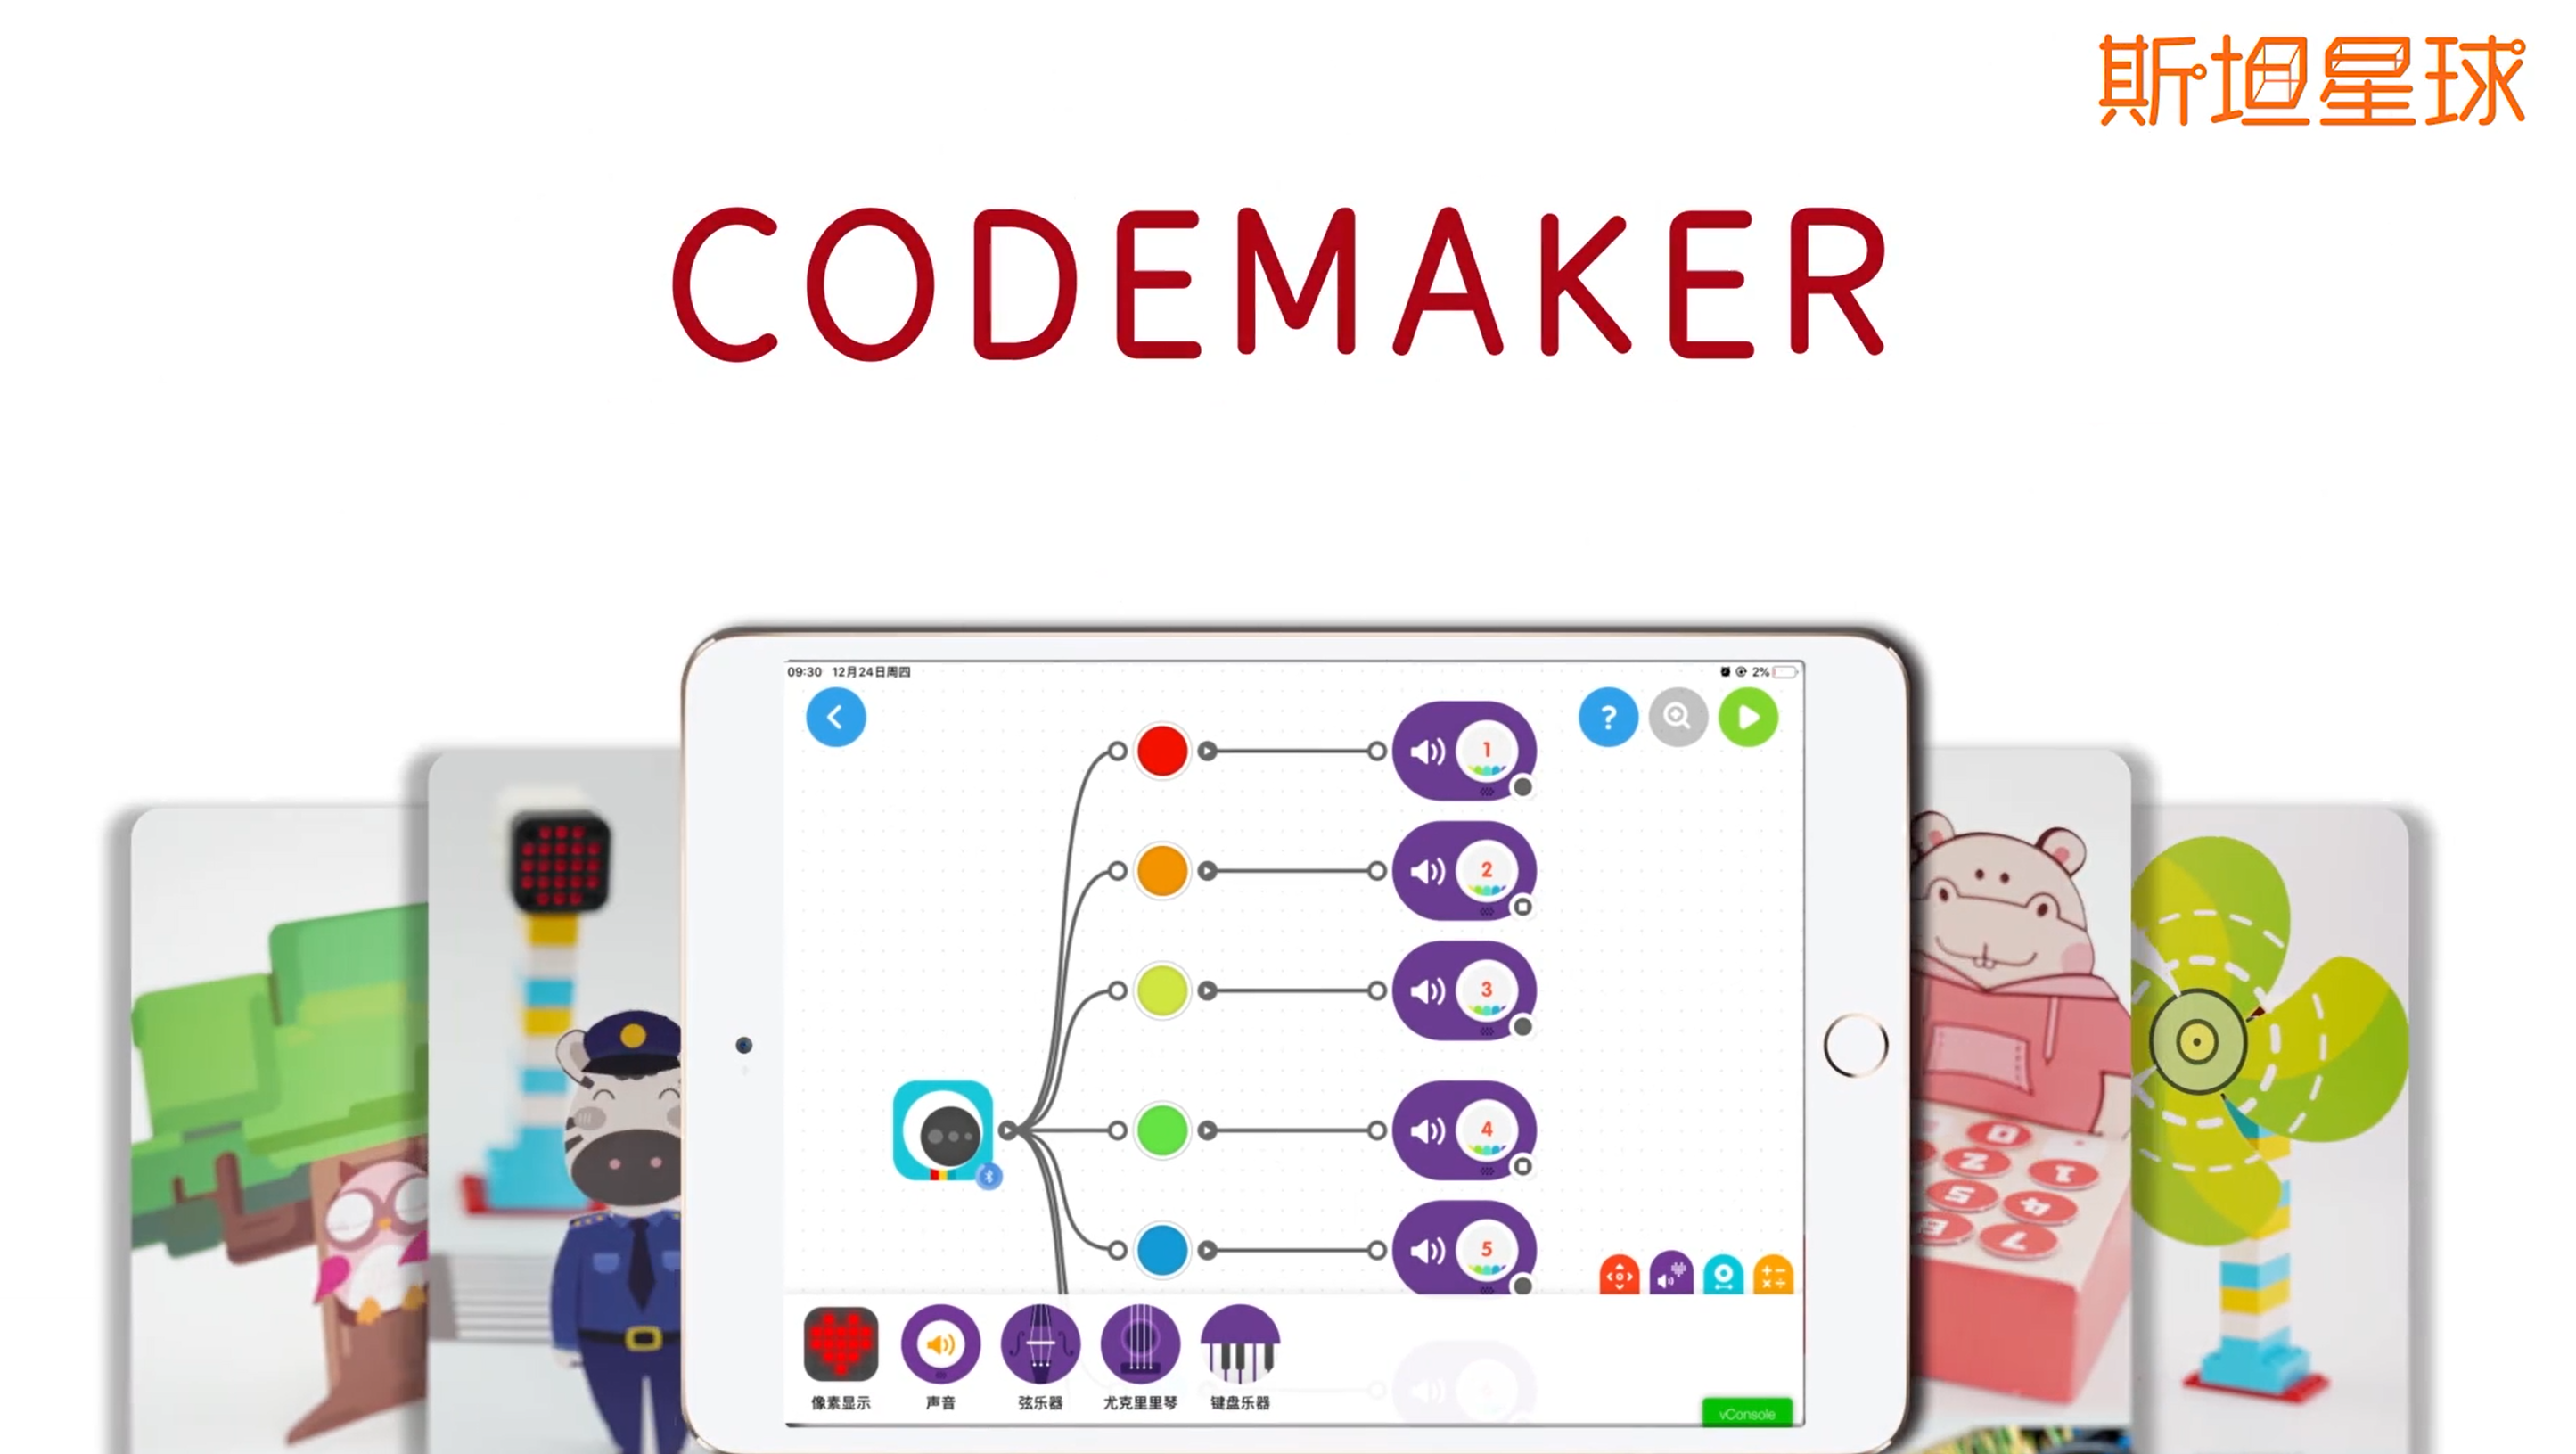 Codemaker幼儿编程专属教具，让孩子秒变“工程狮”，显著提升思维逻辑、计算能力！